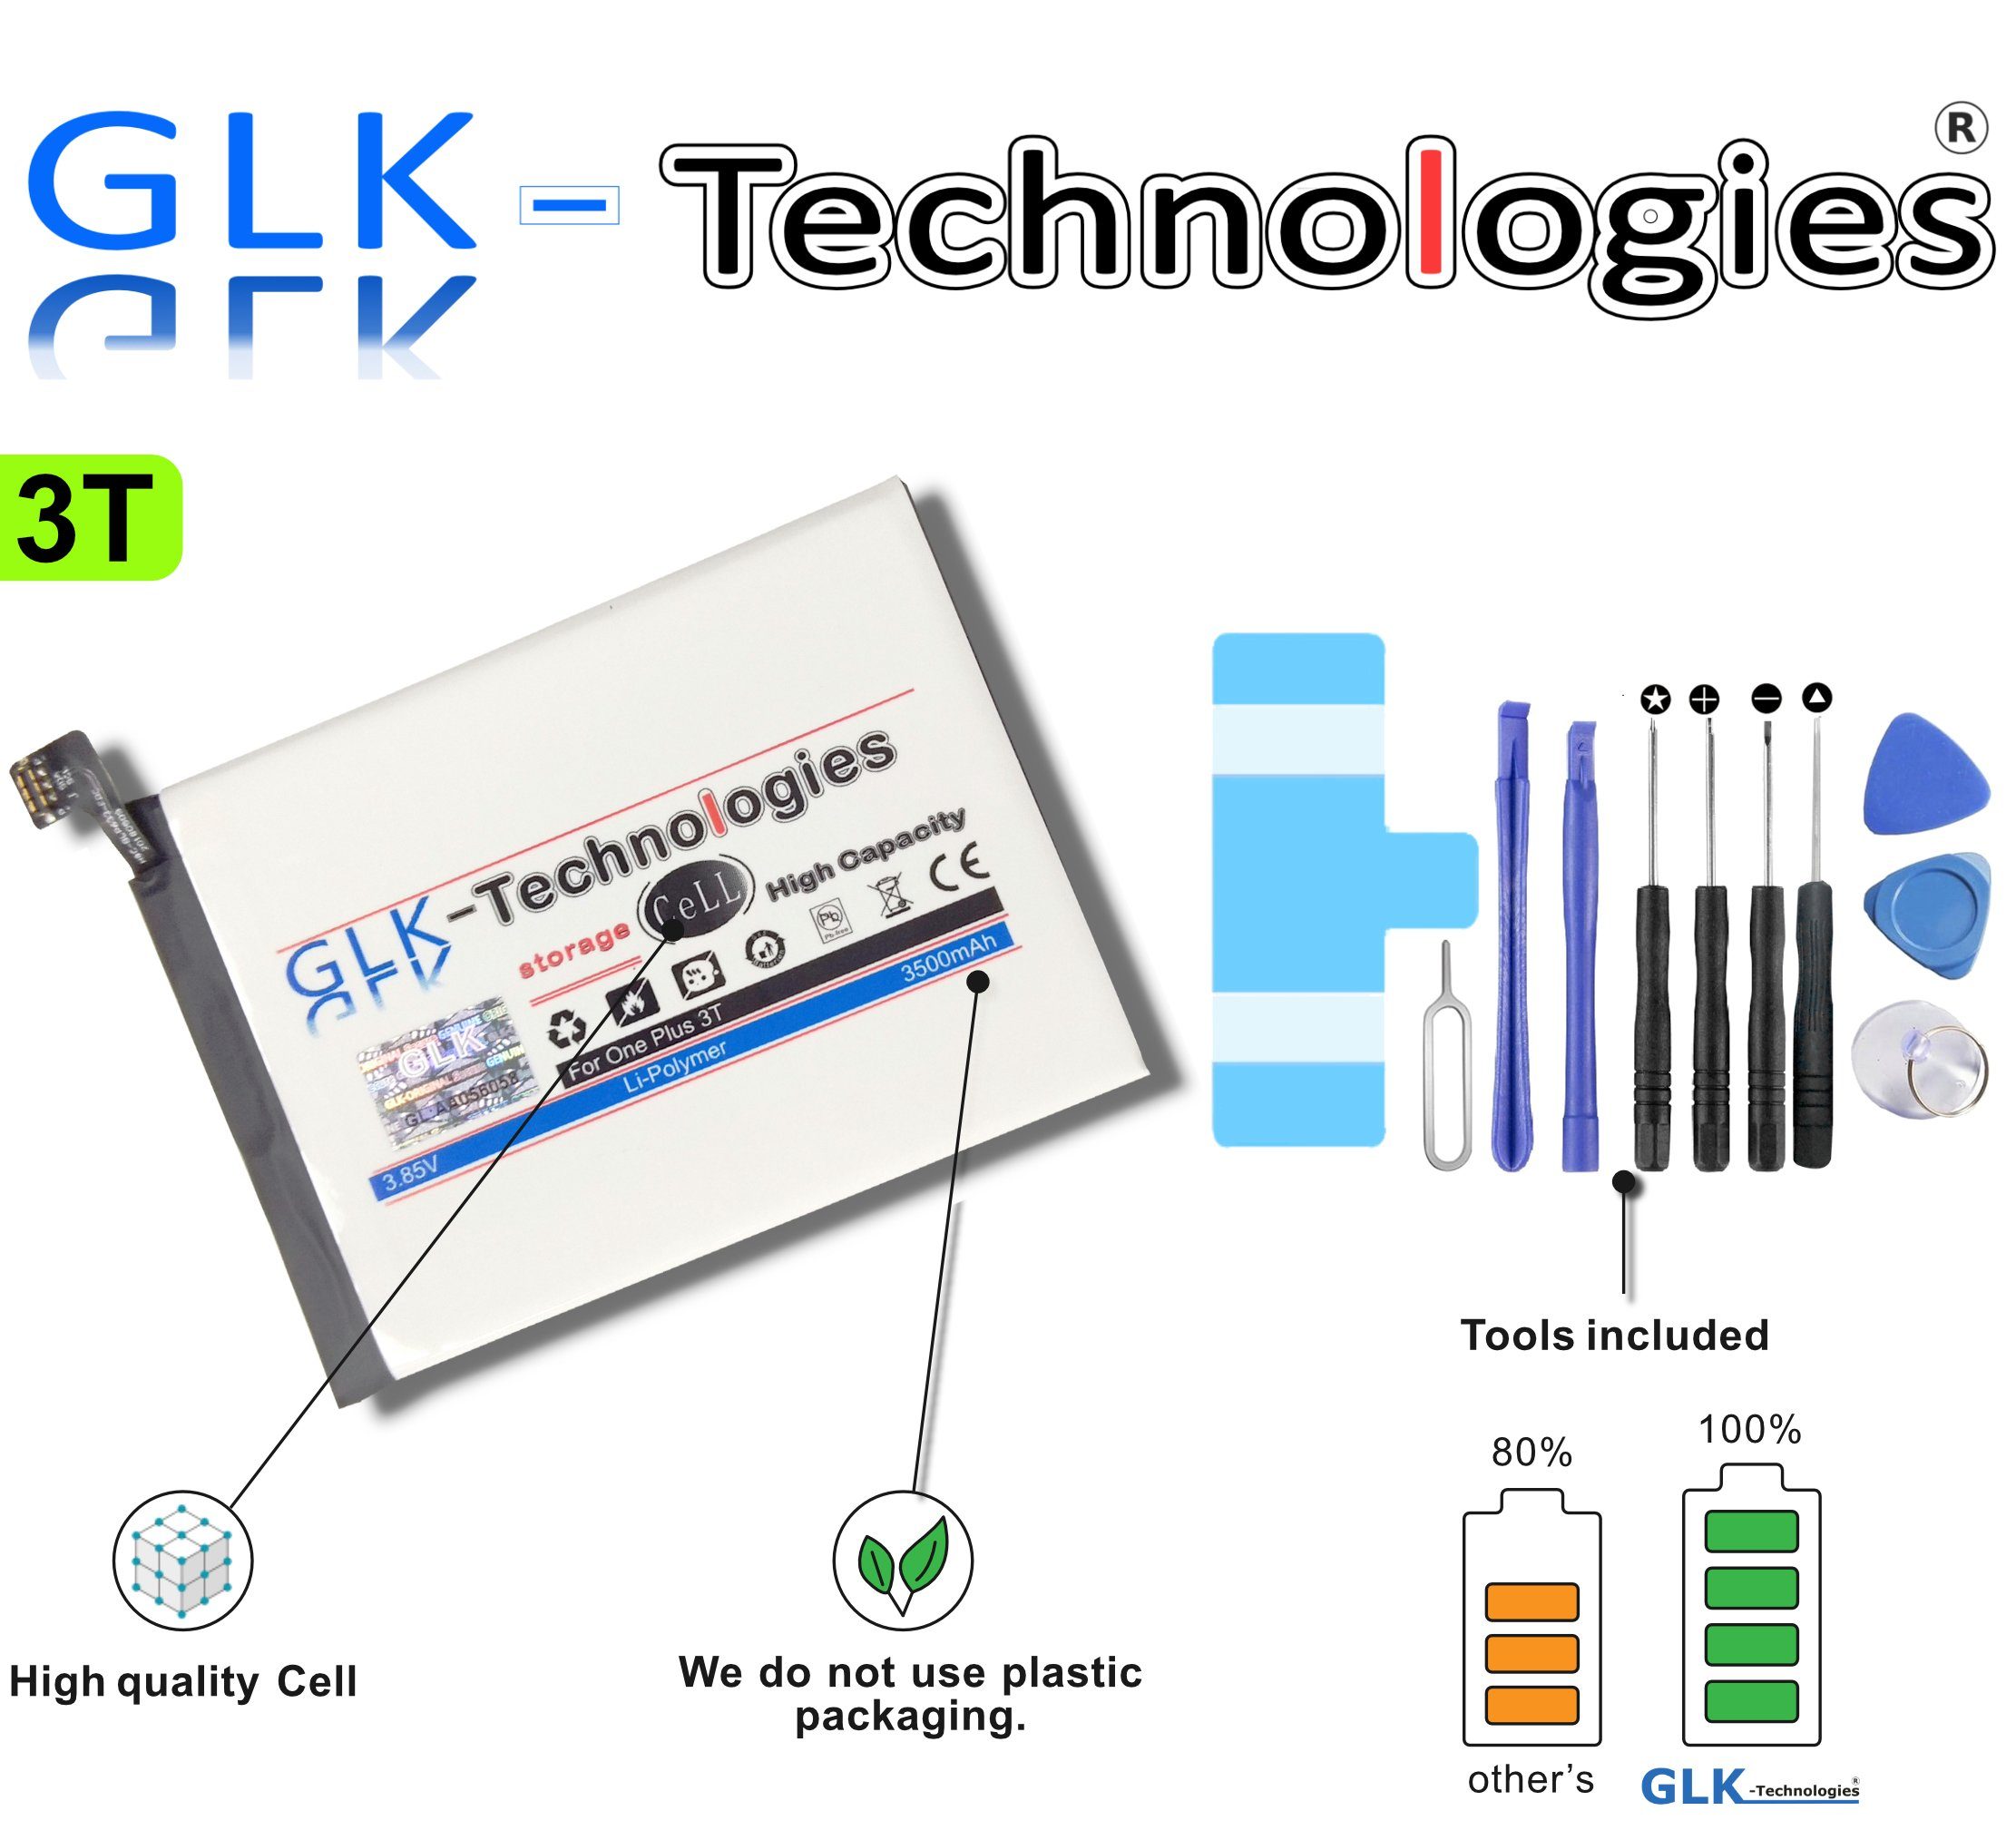 GLK-Technologies High Power Akku für 1+ OnePlus 3T / One Plus 3T, Original GLK-Technologies® Batterie, 3500 mAh Kapazität, inkl Werkzeugset NEU Smartphone-Akku 3500 mAh (3.8 V)